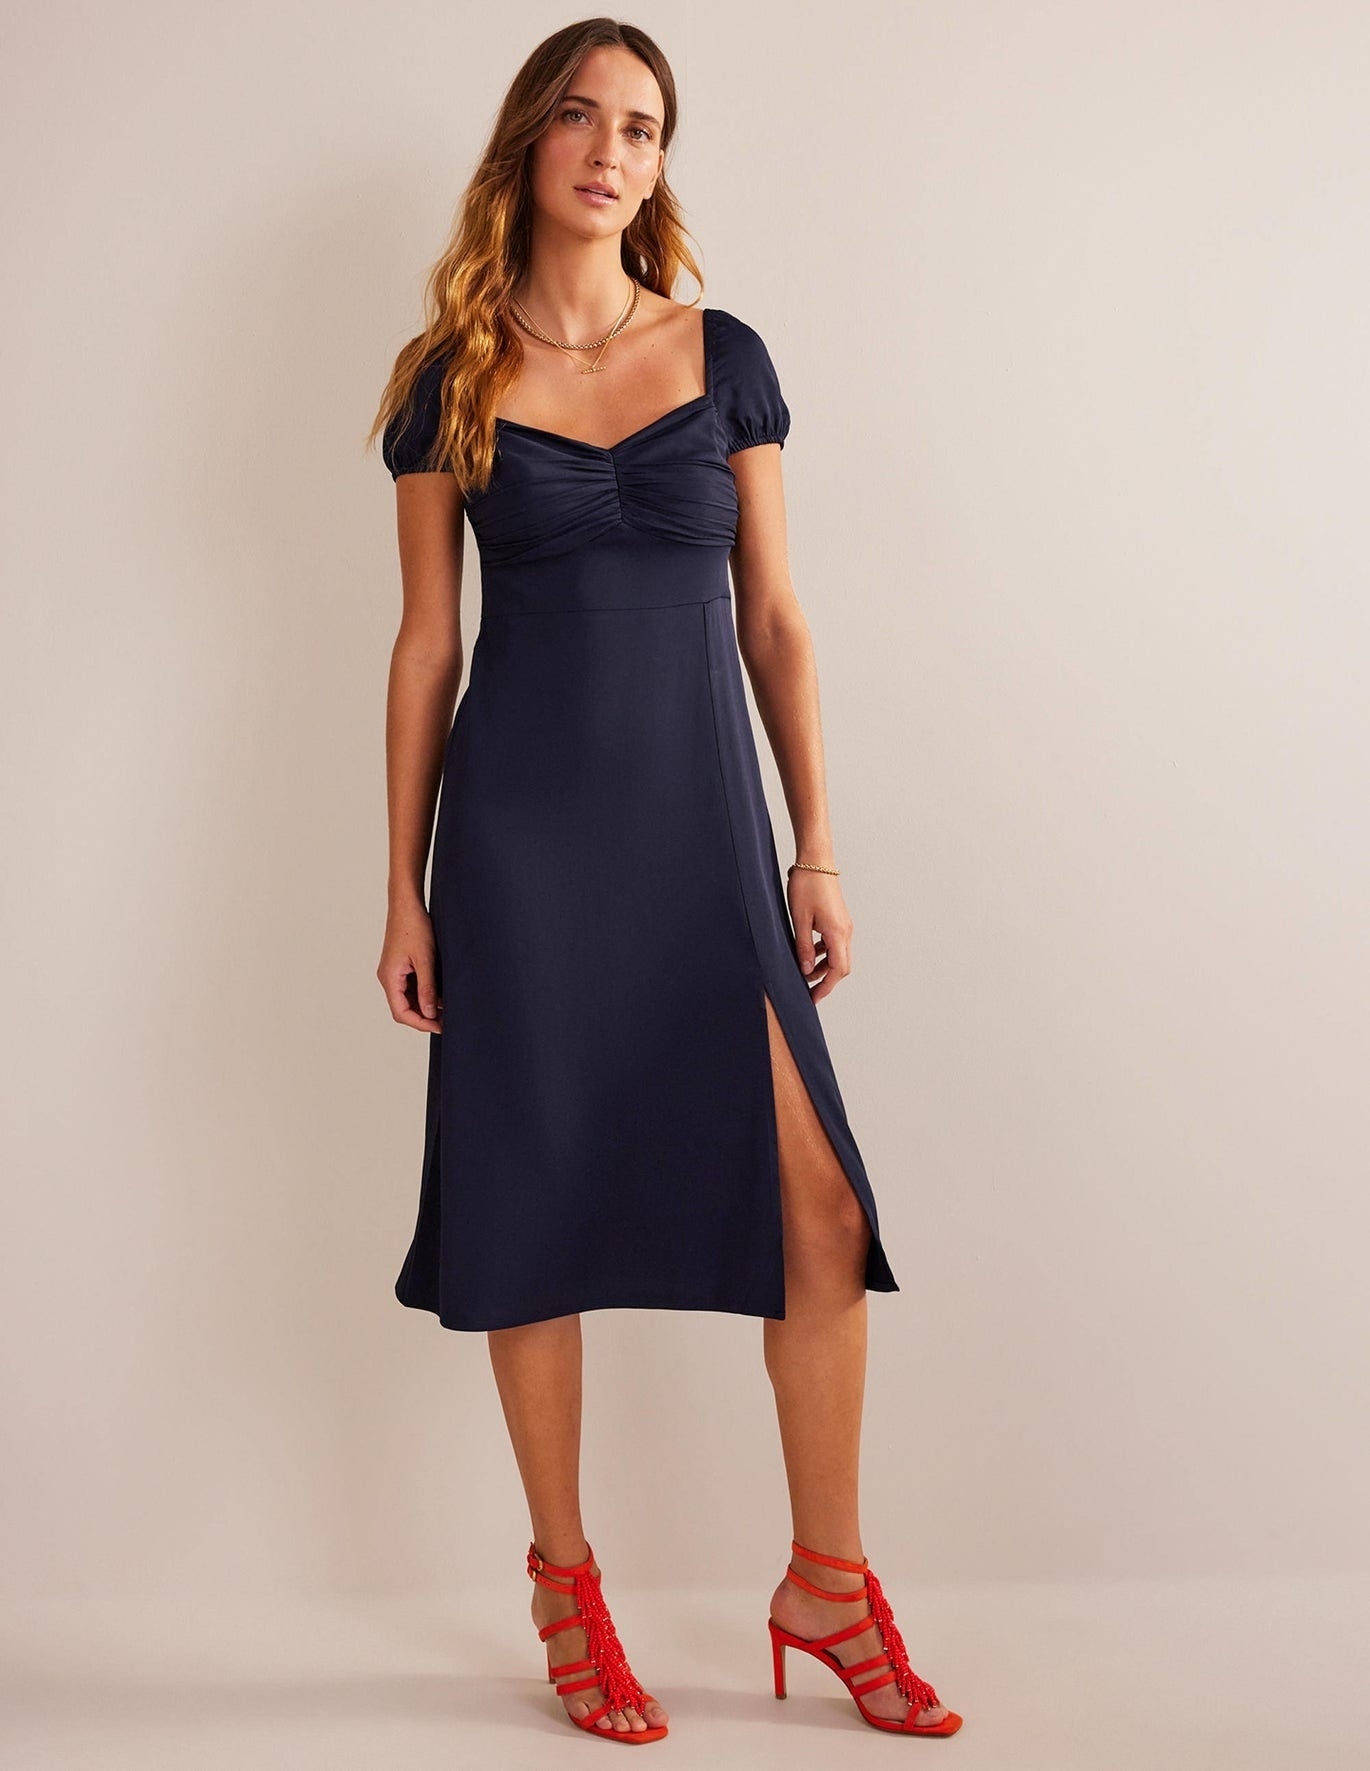 A model wearing a blue dress with a leg slit.